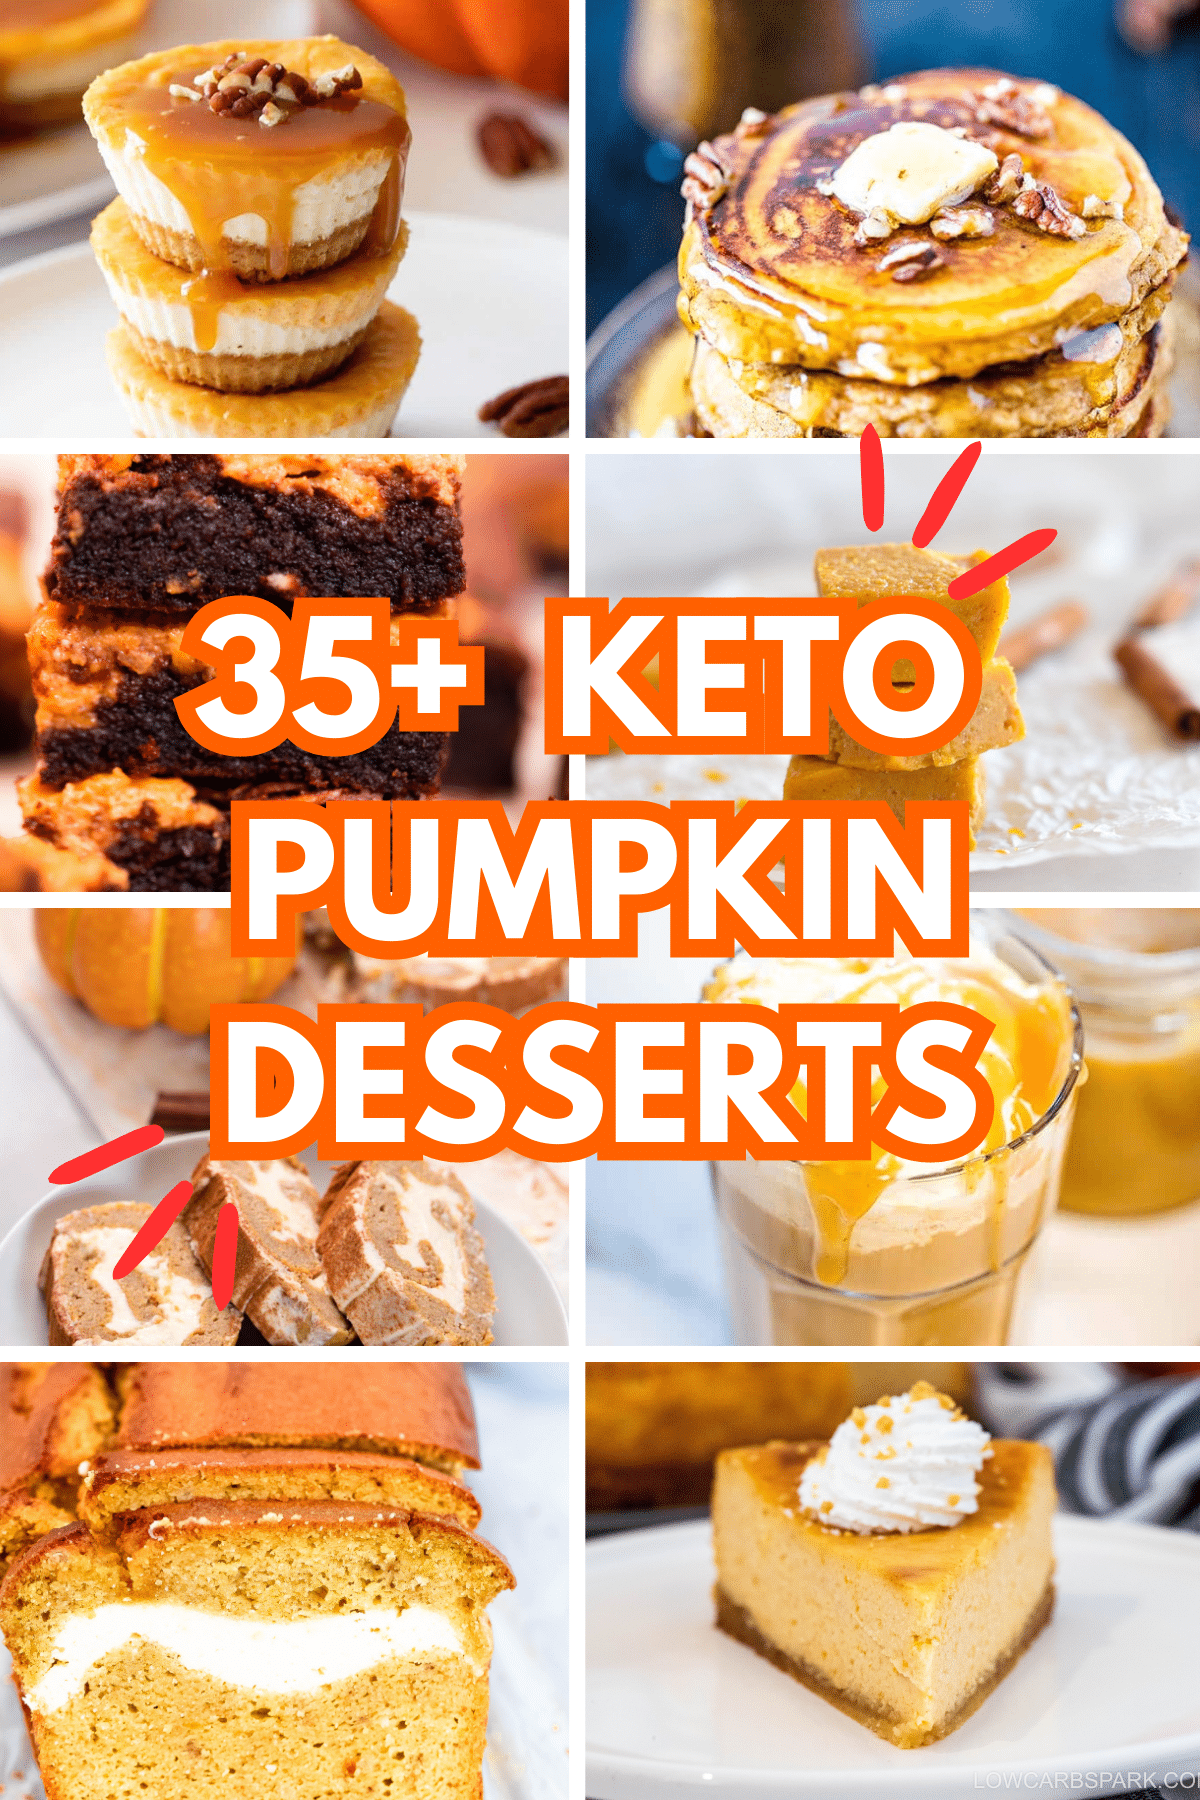 keto pumpkin desserts lowcarbspark